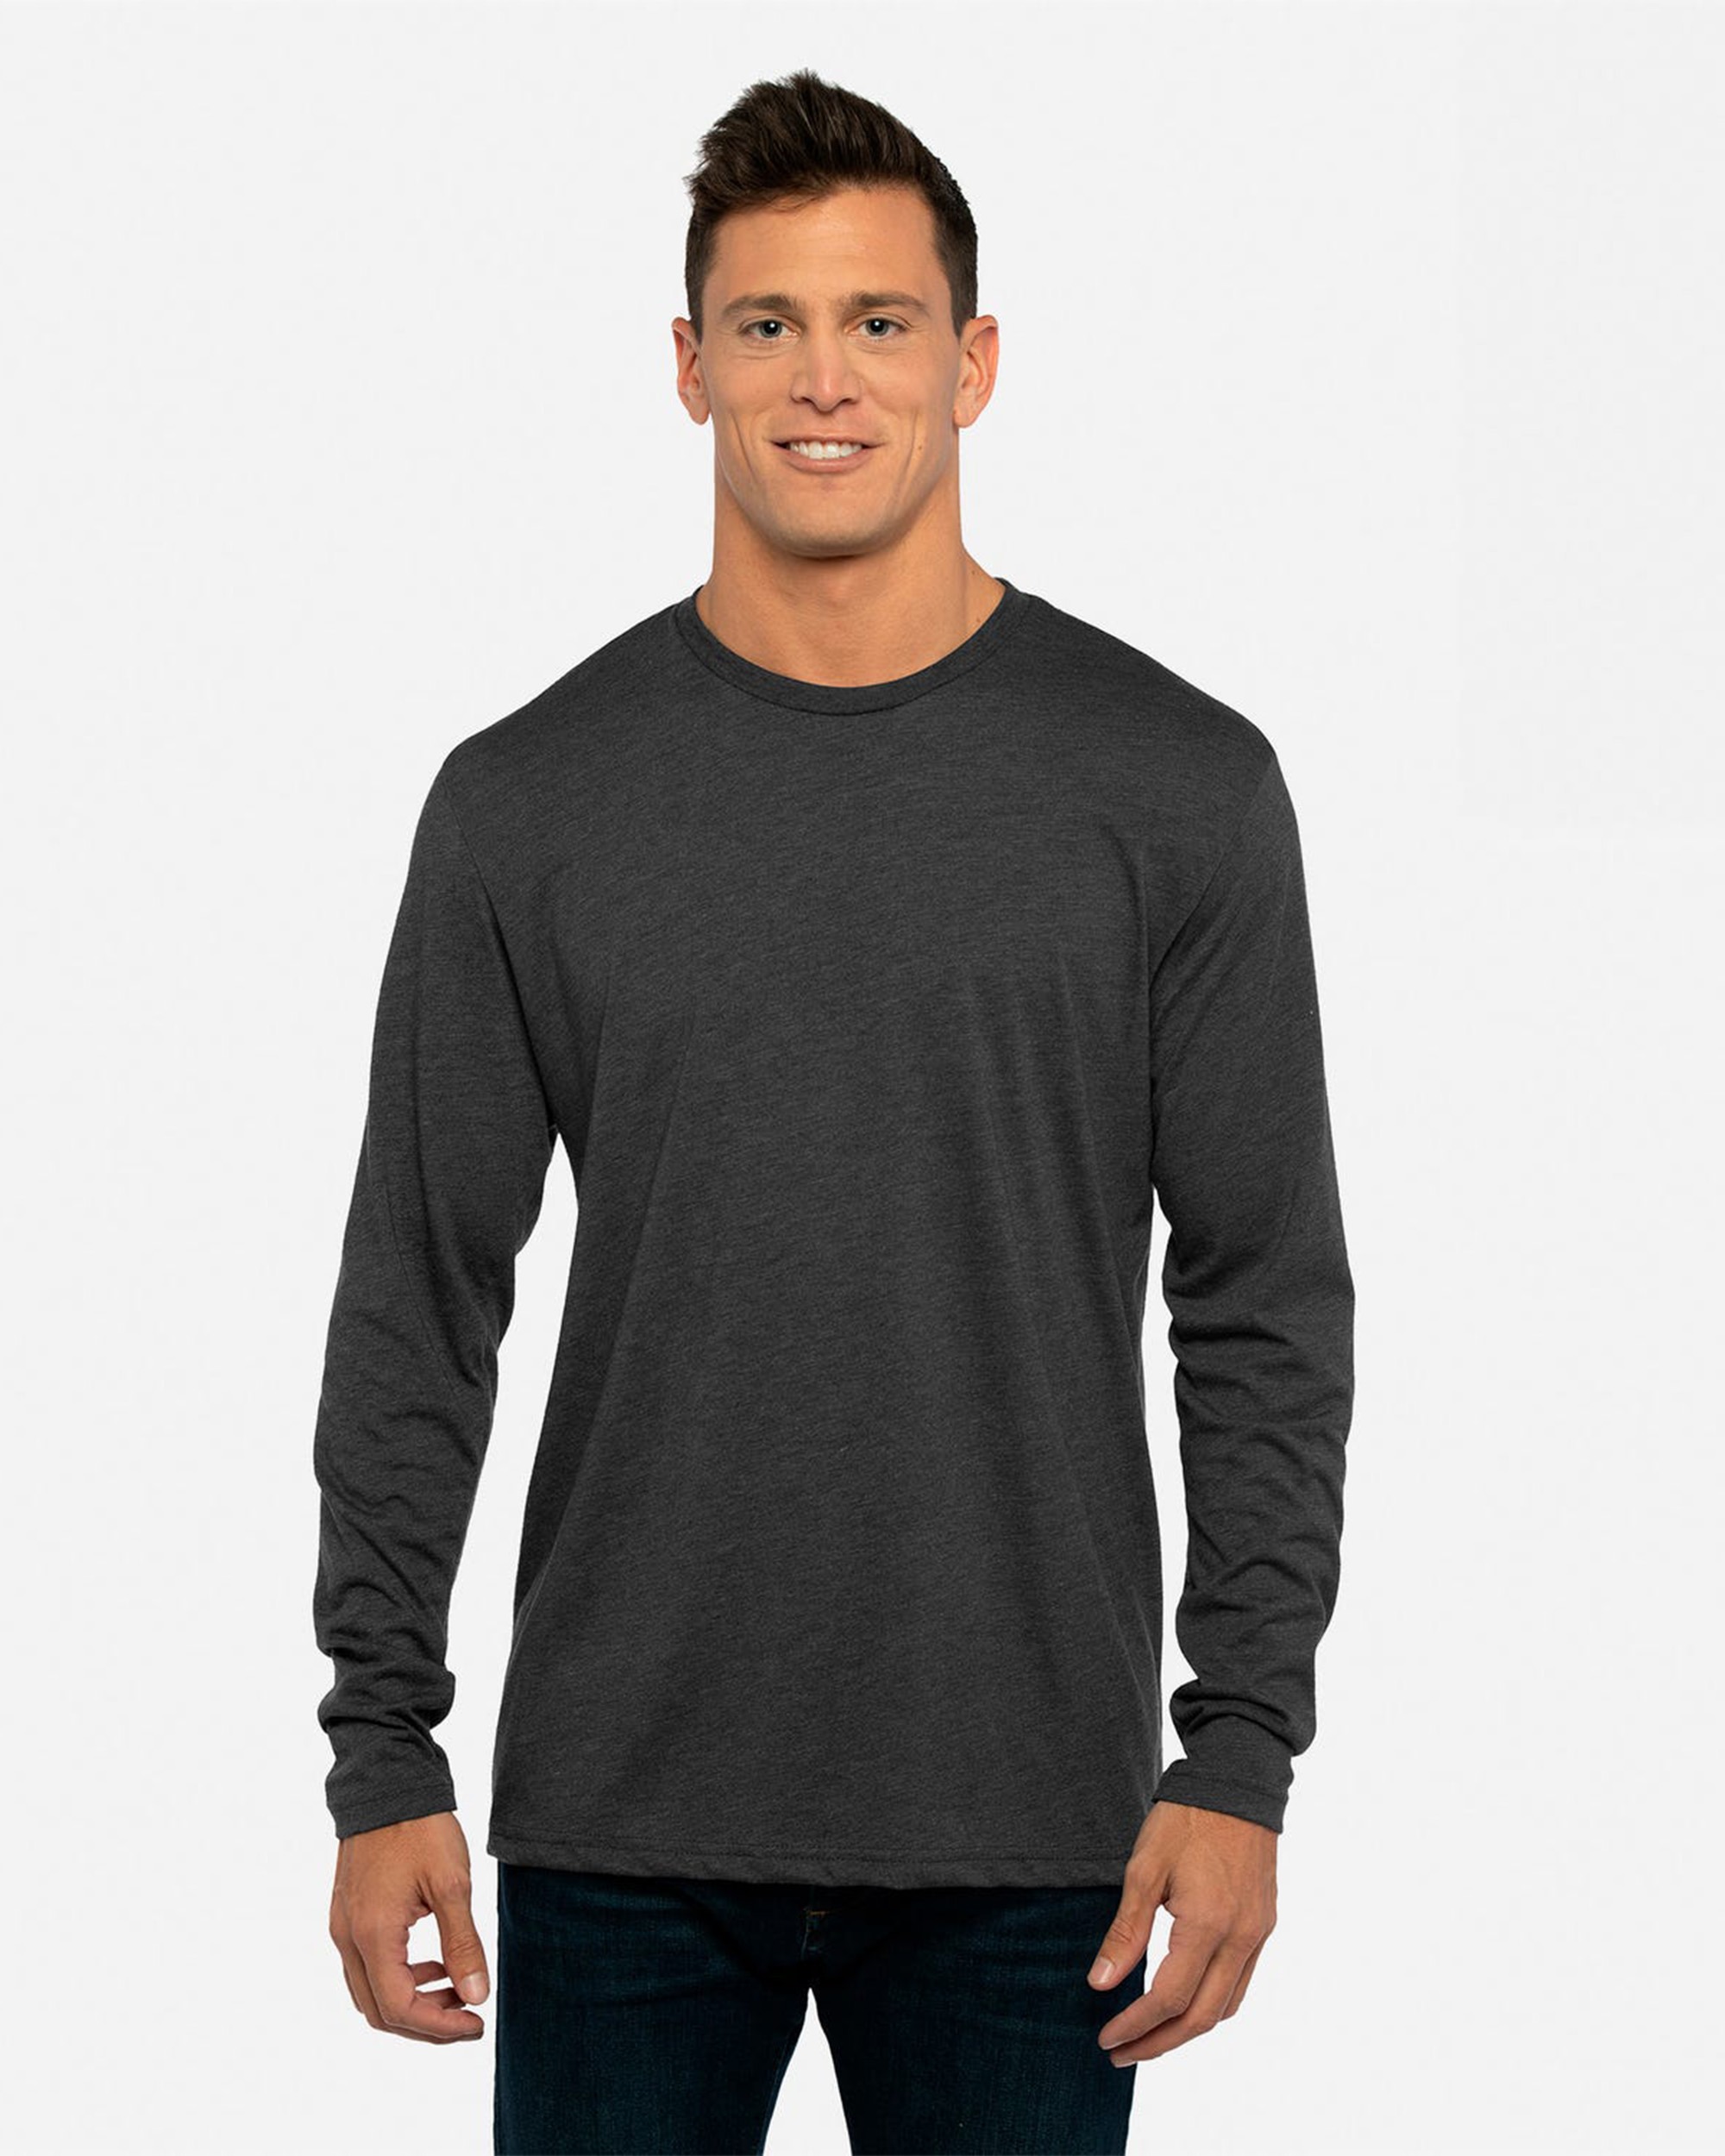 Next Level Apparel® 6071 Unisex Tri-Blend Long Sleeve T-Shirt